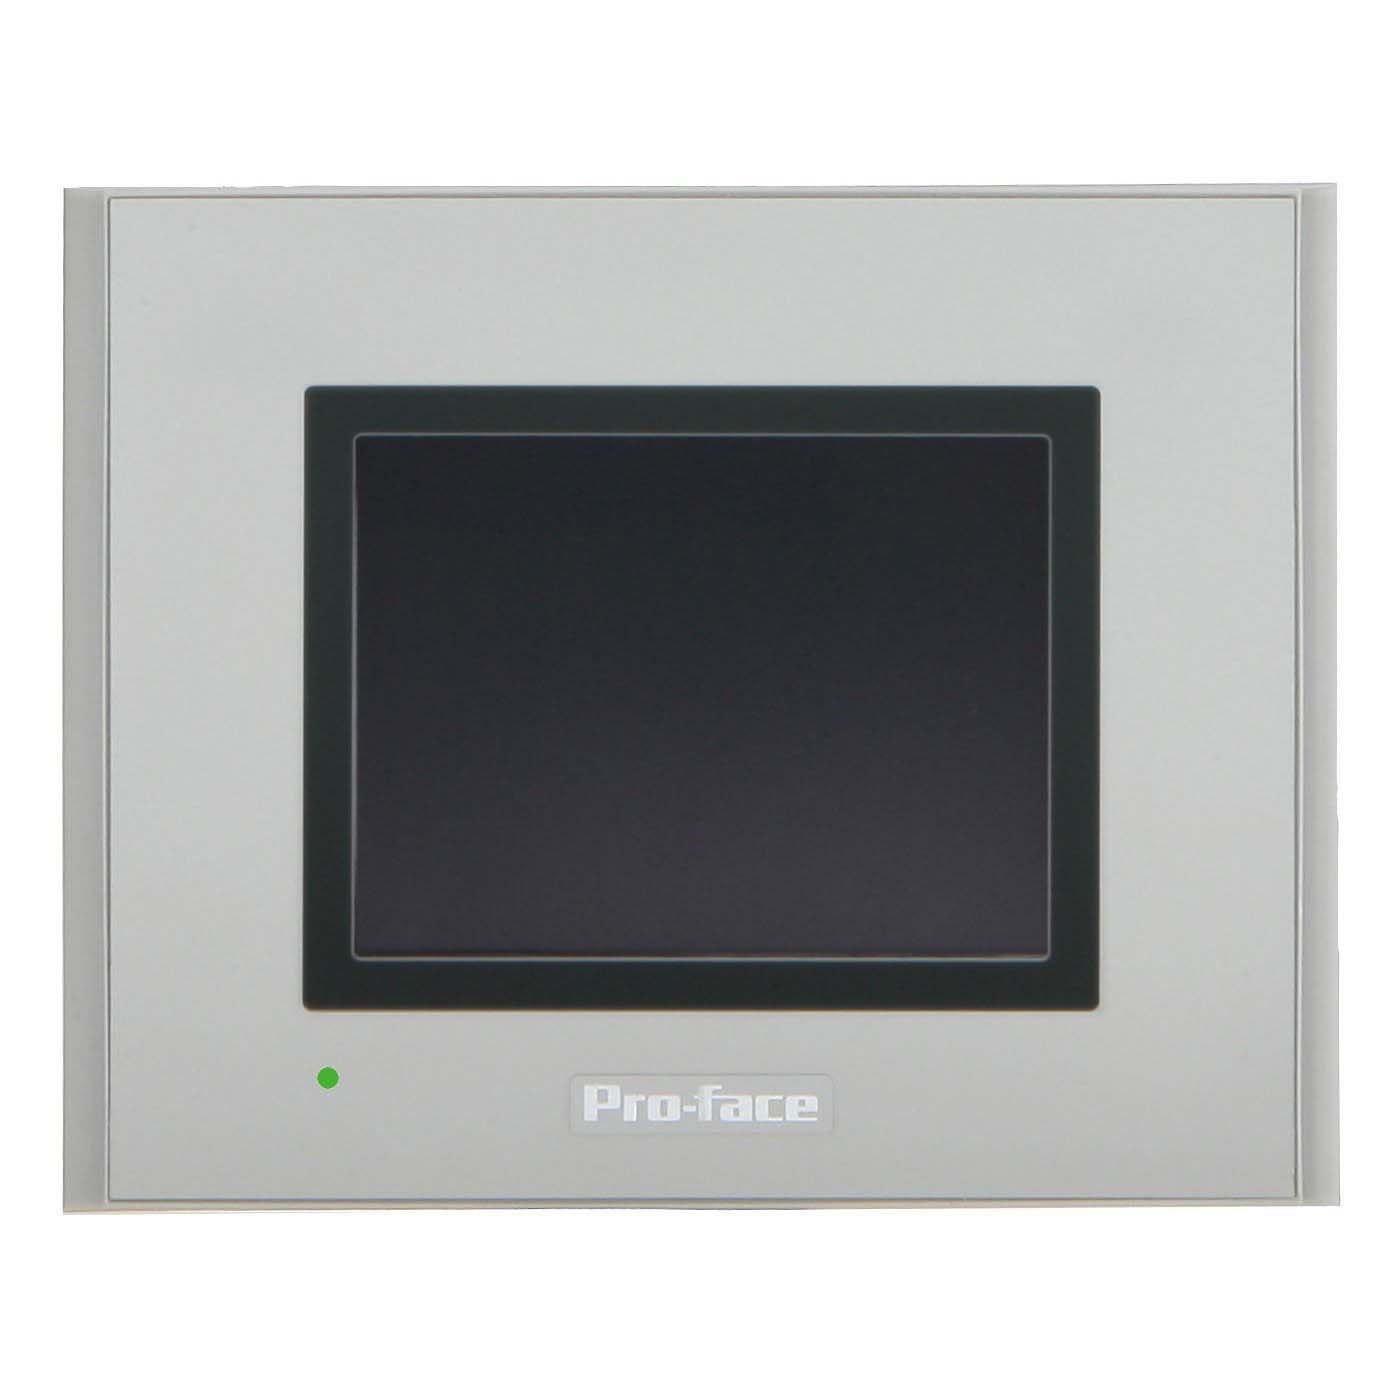 Pro-face GP4000 Farb TFT LCD HMI-Touchscreen 800 x 480pixels, 24 V dc, 218 x 60 x 173 mm